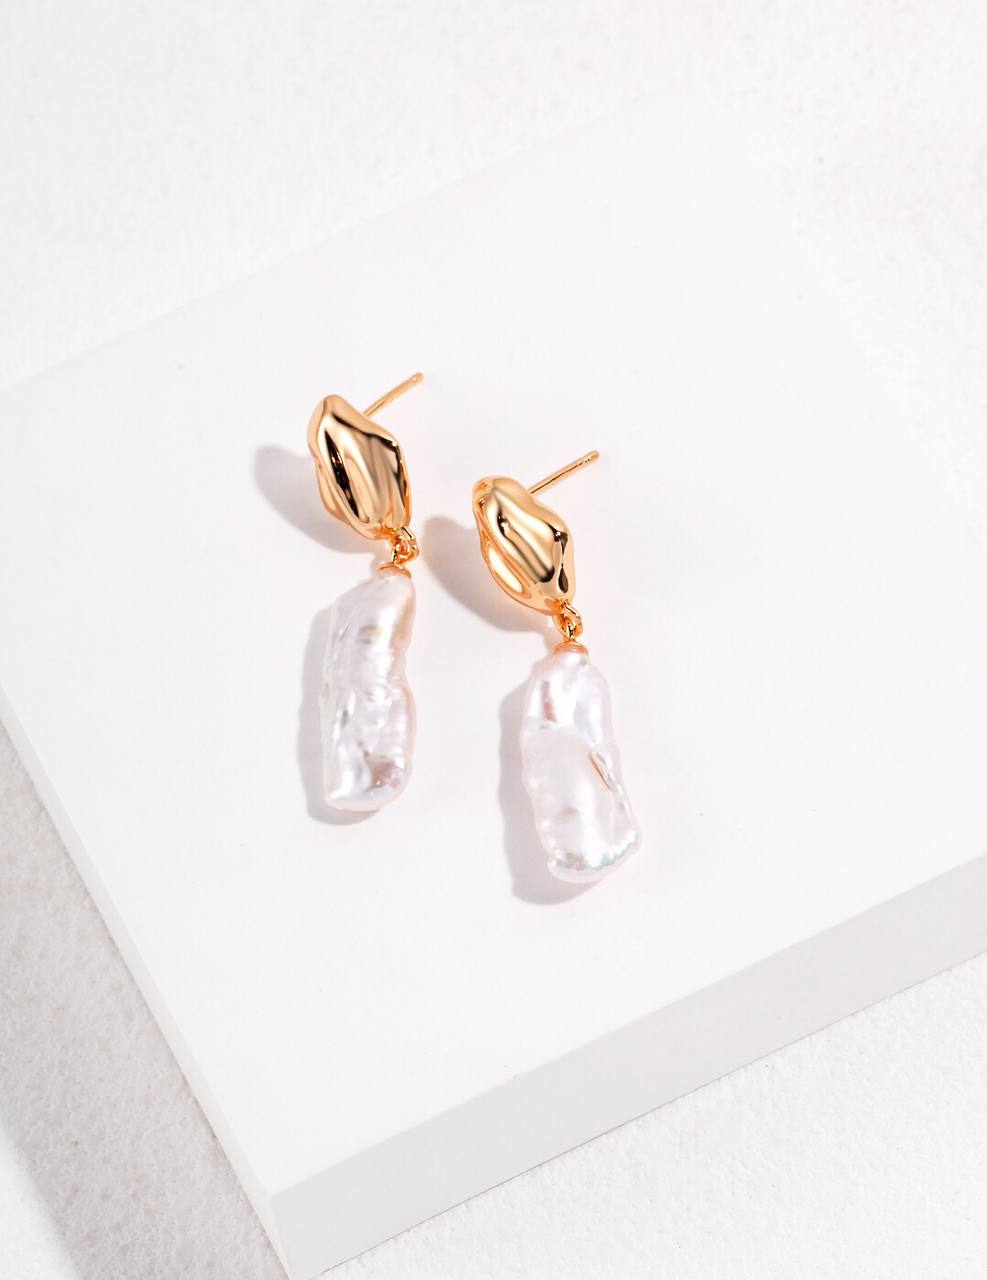 Sterling Silver Baroque Pearl Earrings